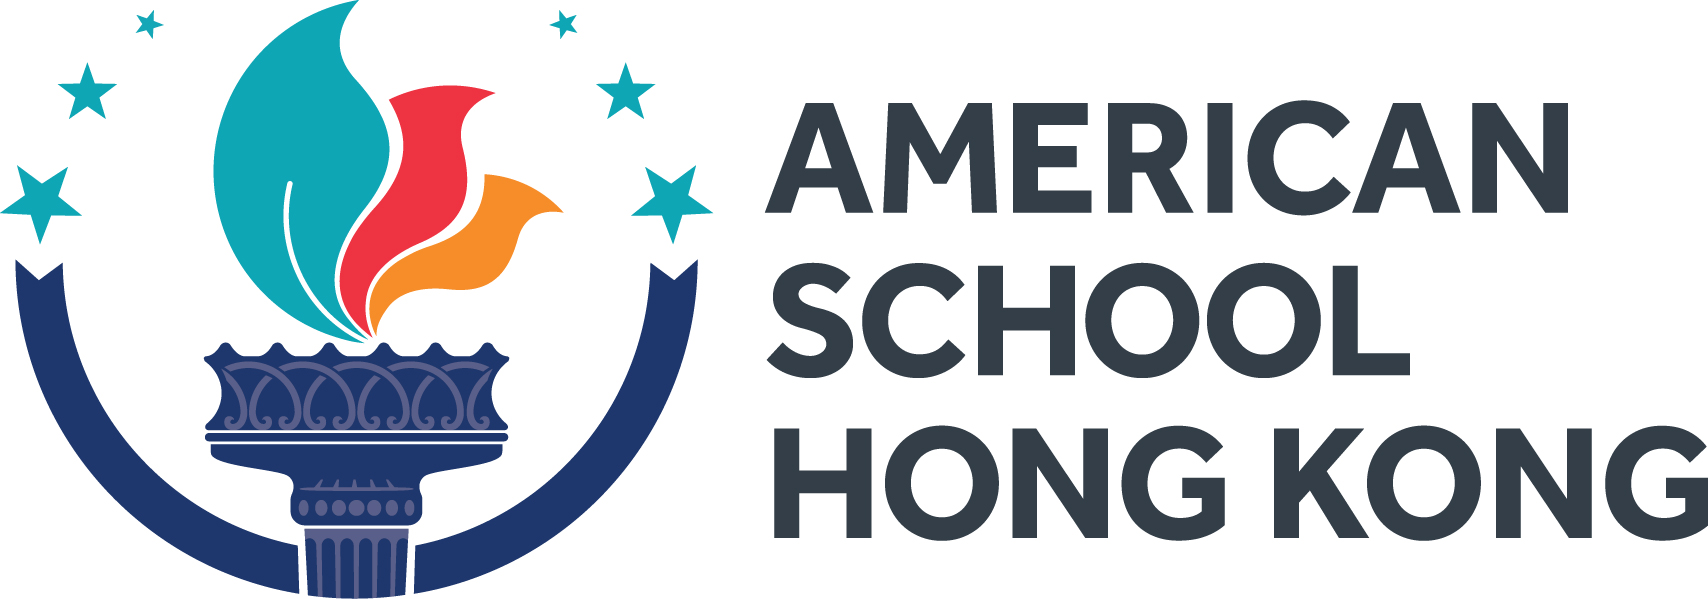 American School Hong Kong - banner